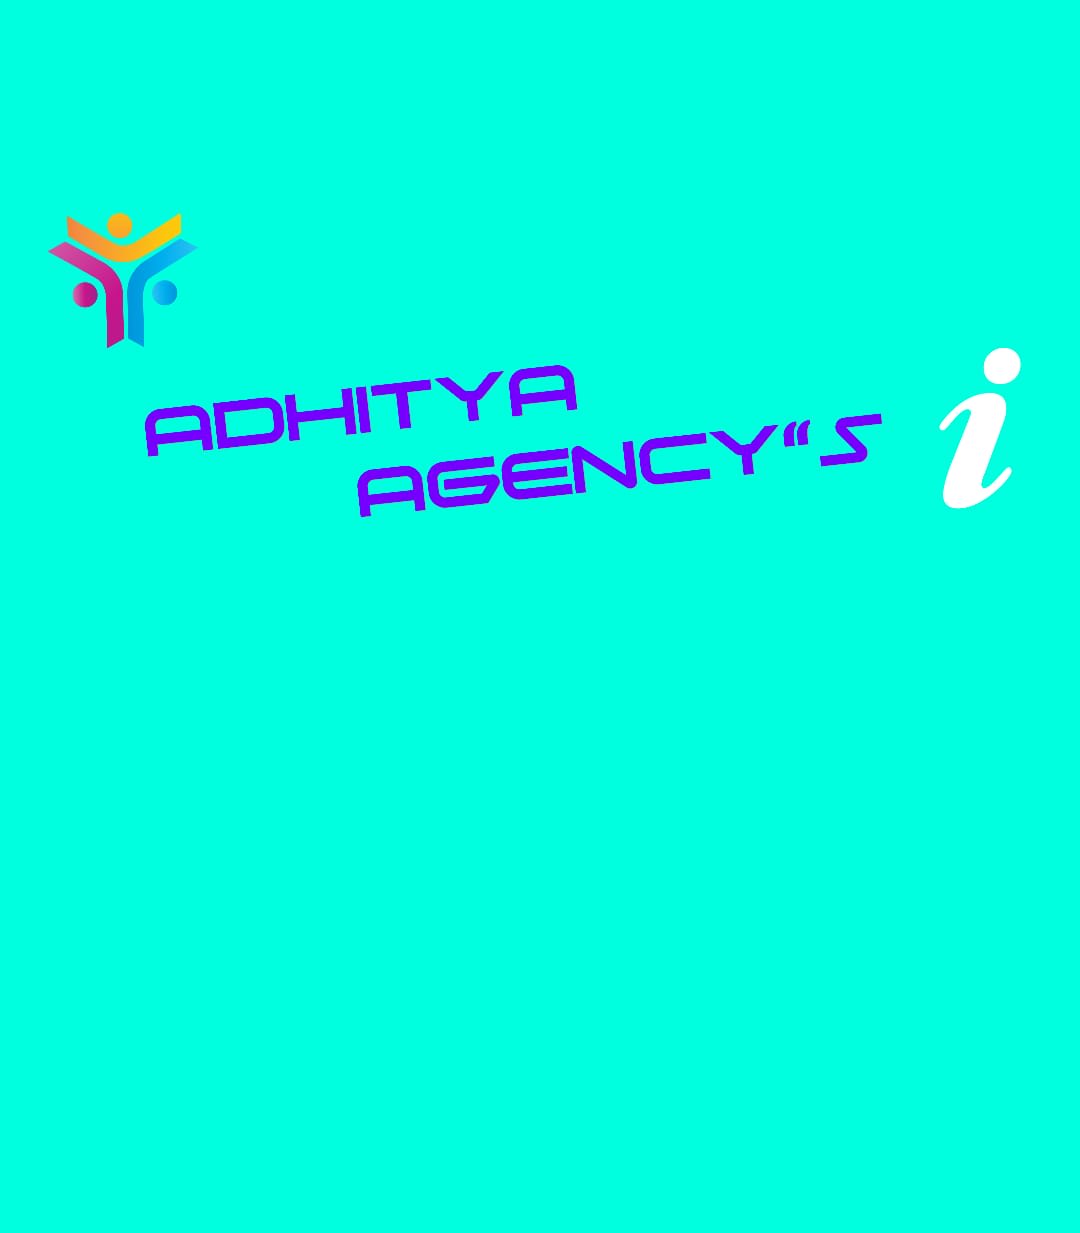 Adithya agencies